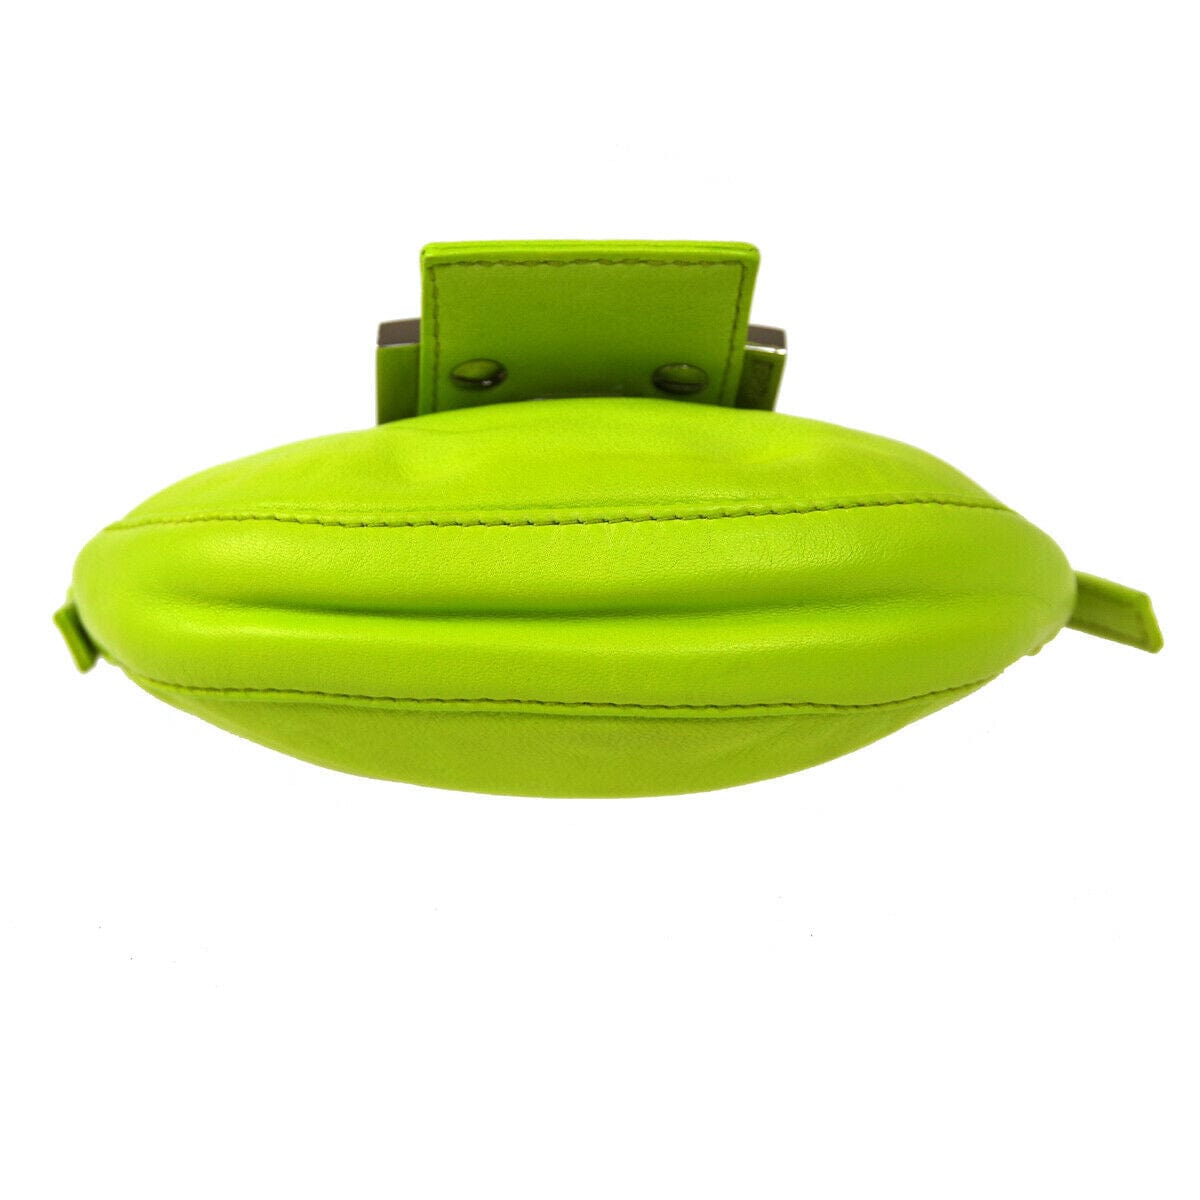 Chanel Fendi neon green mini bag UKL1072